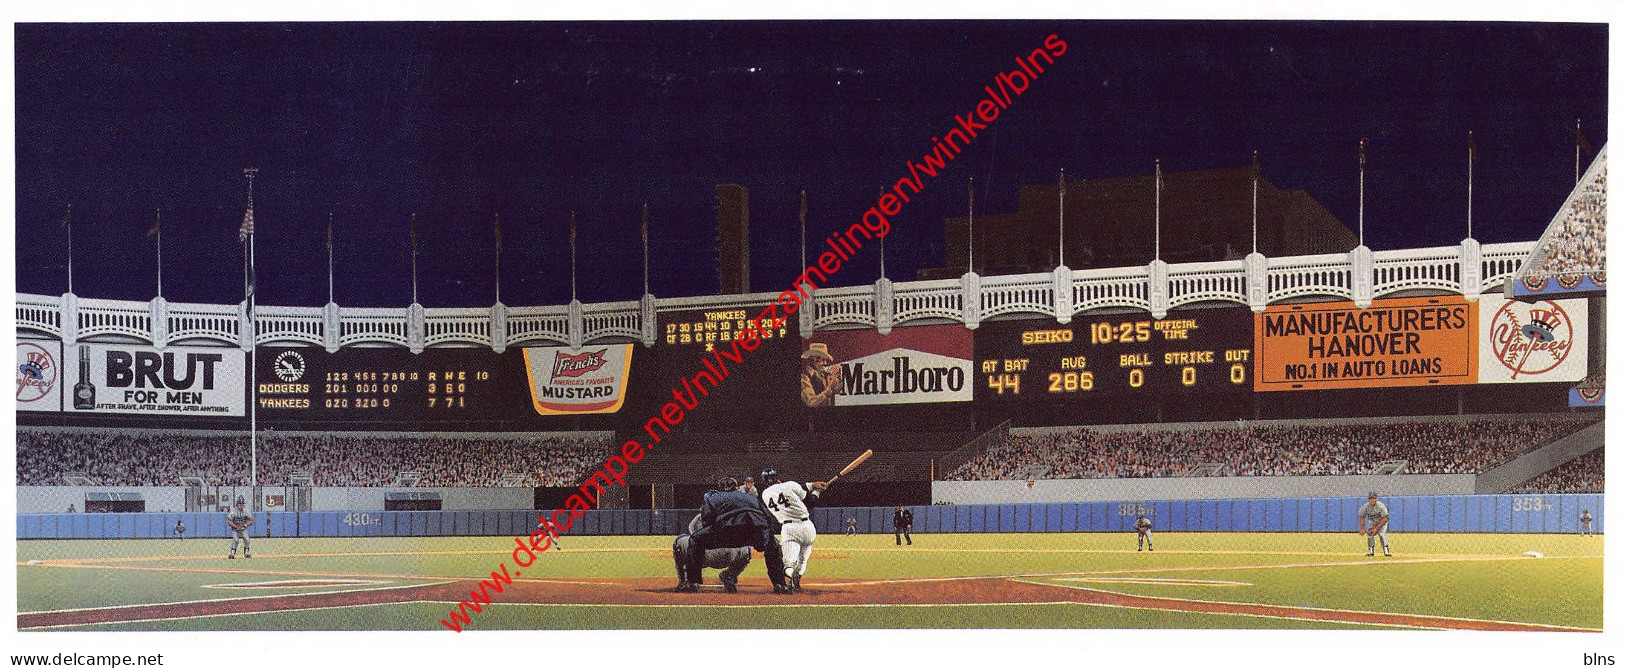 Yankee Stadium Triumph By Bill Purdom - Baseball - 23x9,5cm - Baseball